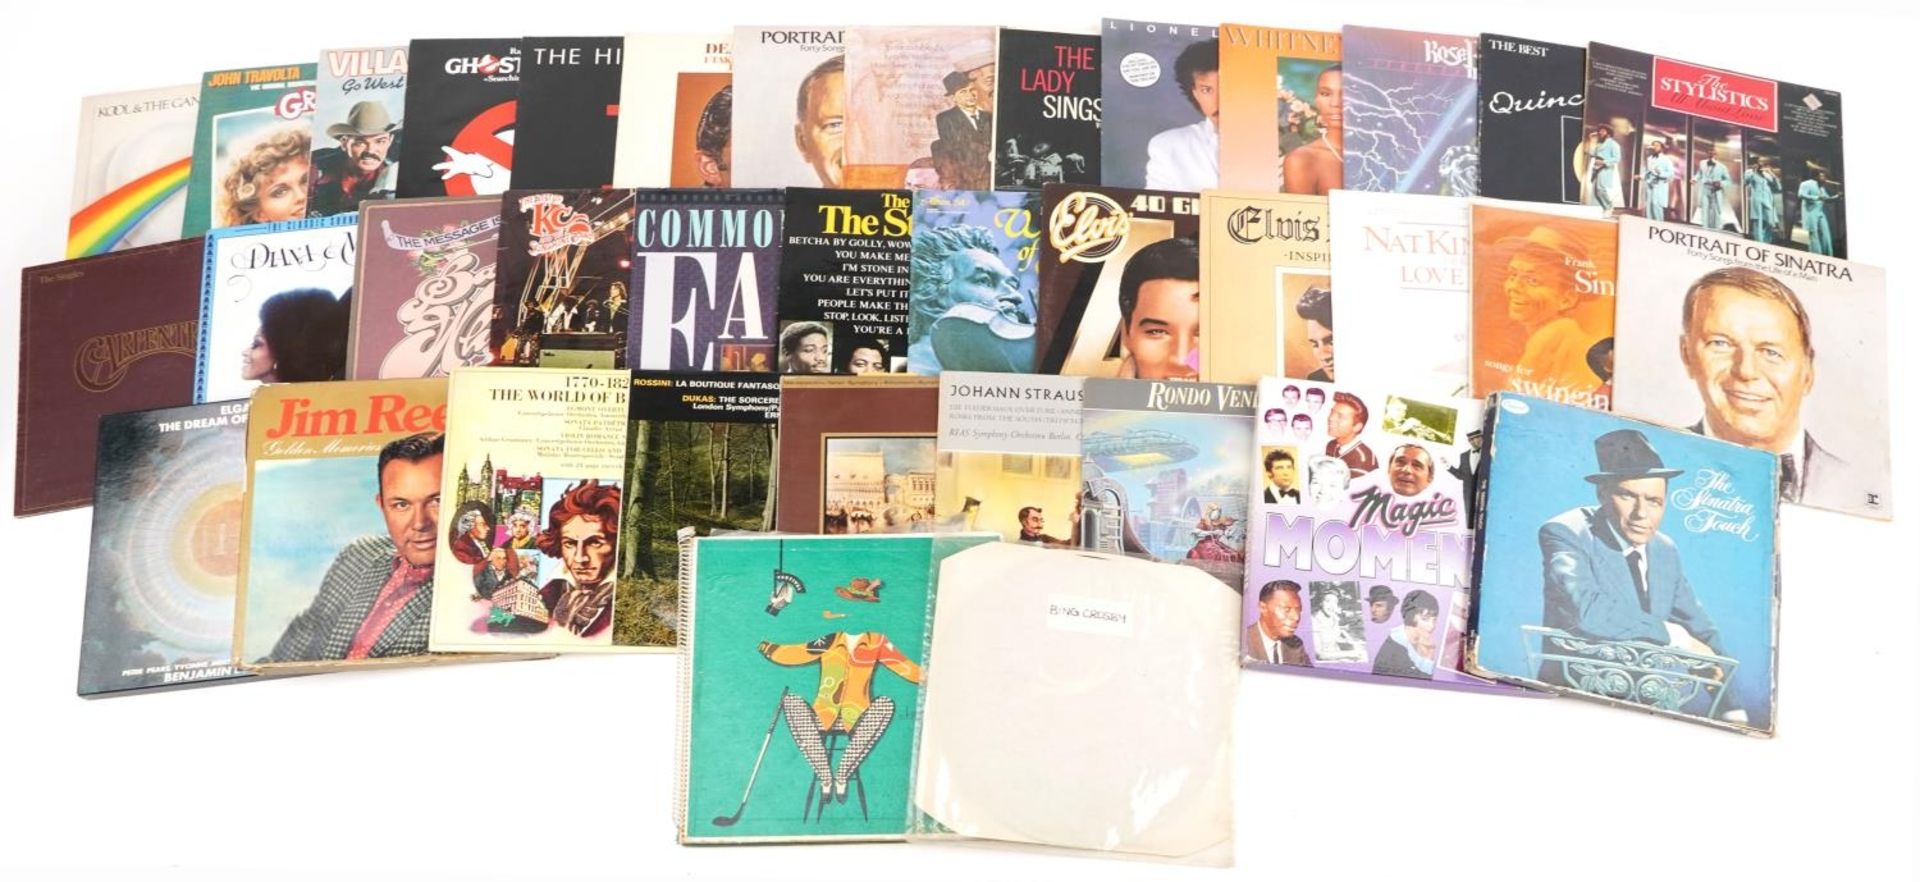 Vinyl LP records, some sound tracks, including Lionel Richie, The Carpenters, Nat King Cole, Frank